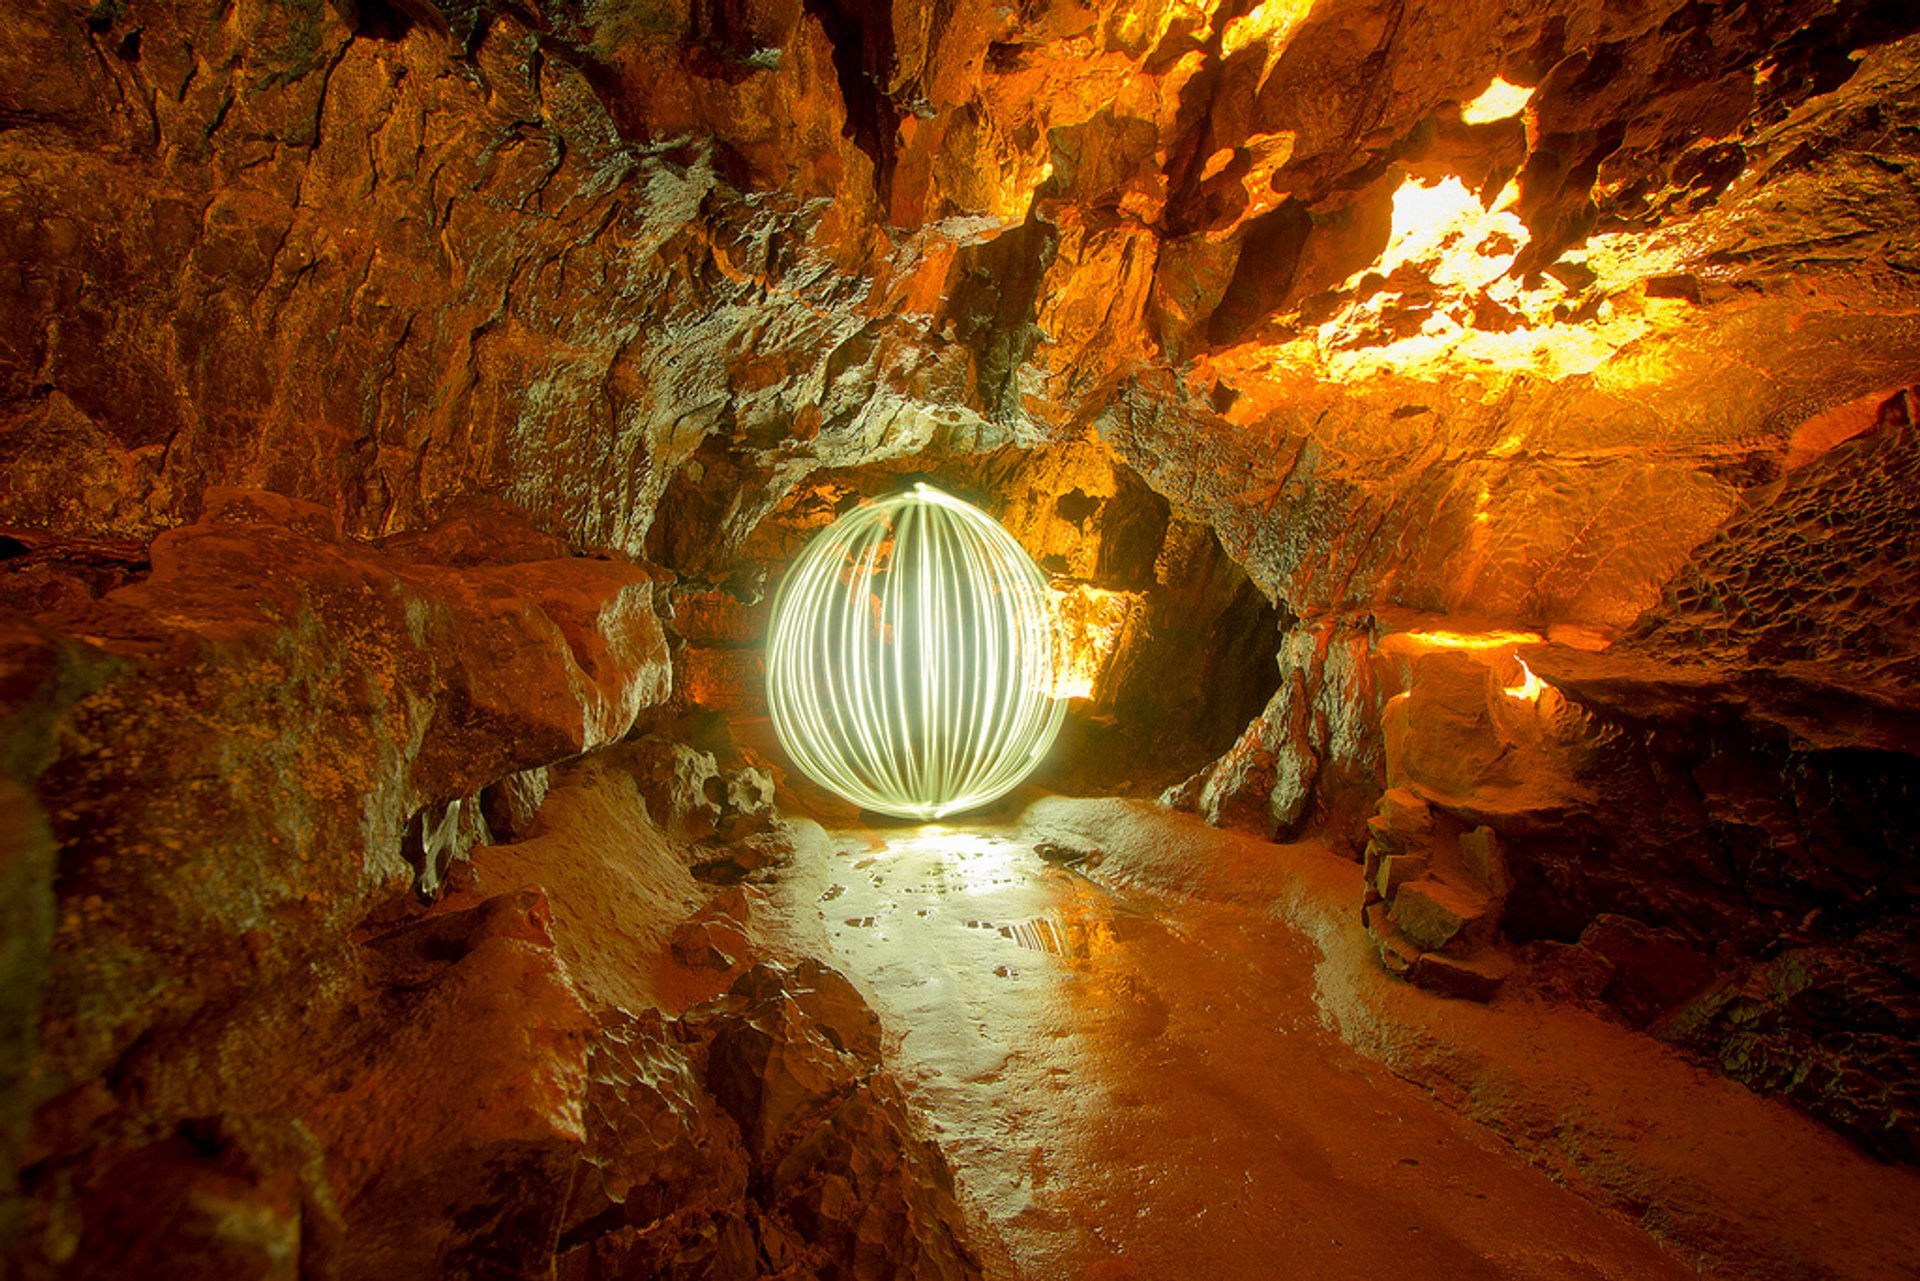 Dan-yr-Ogof, Centro Nacional de cavernas de Gales